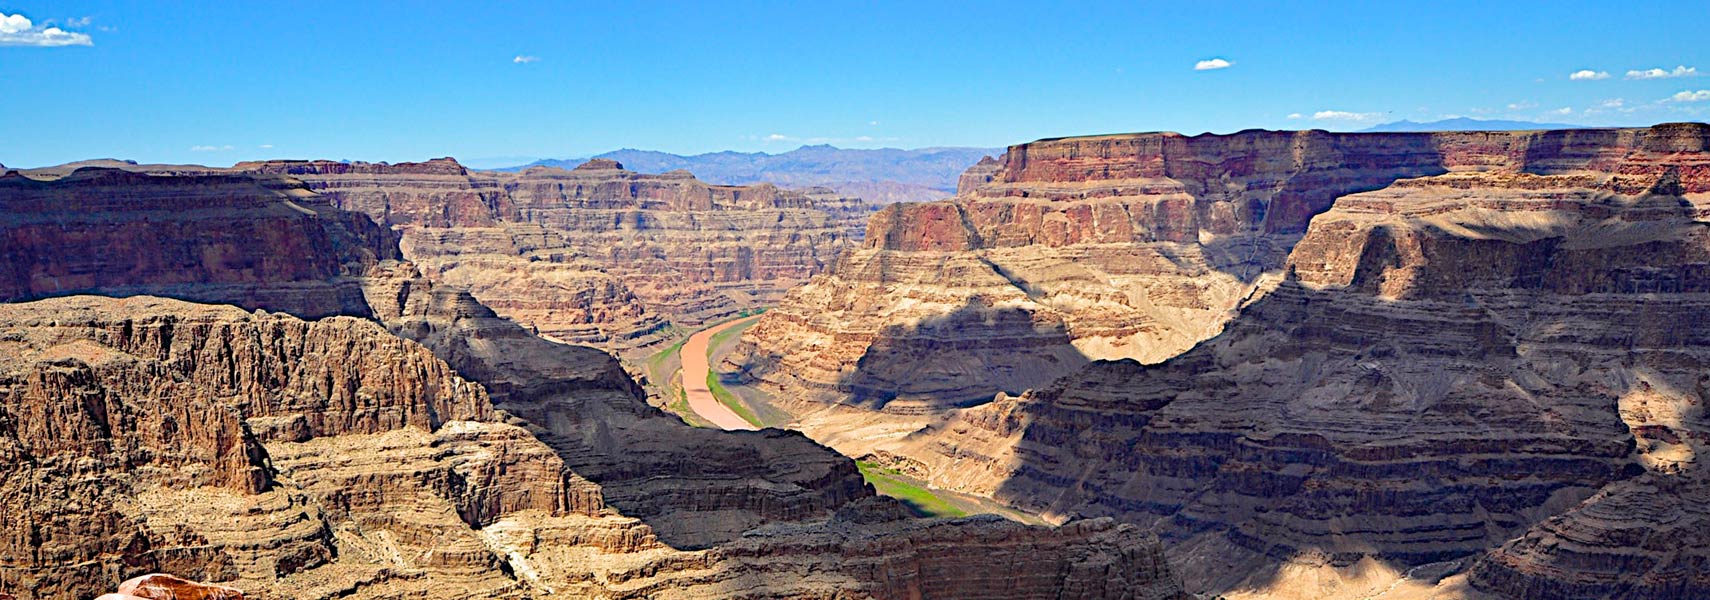 West Rim, Grand Canyon National Park, Arizona